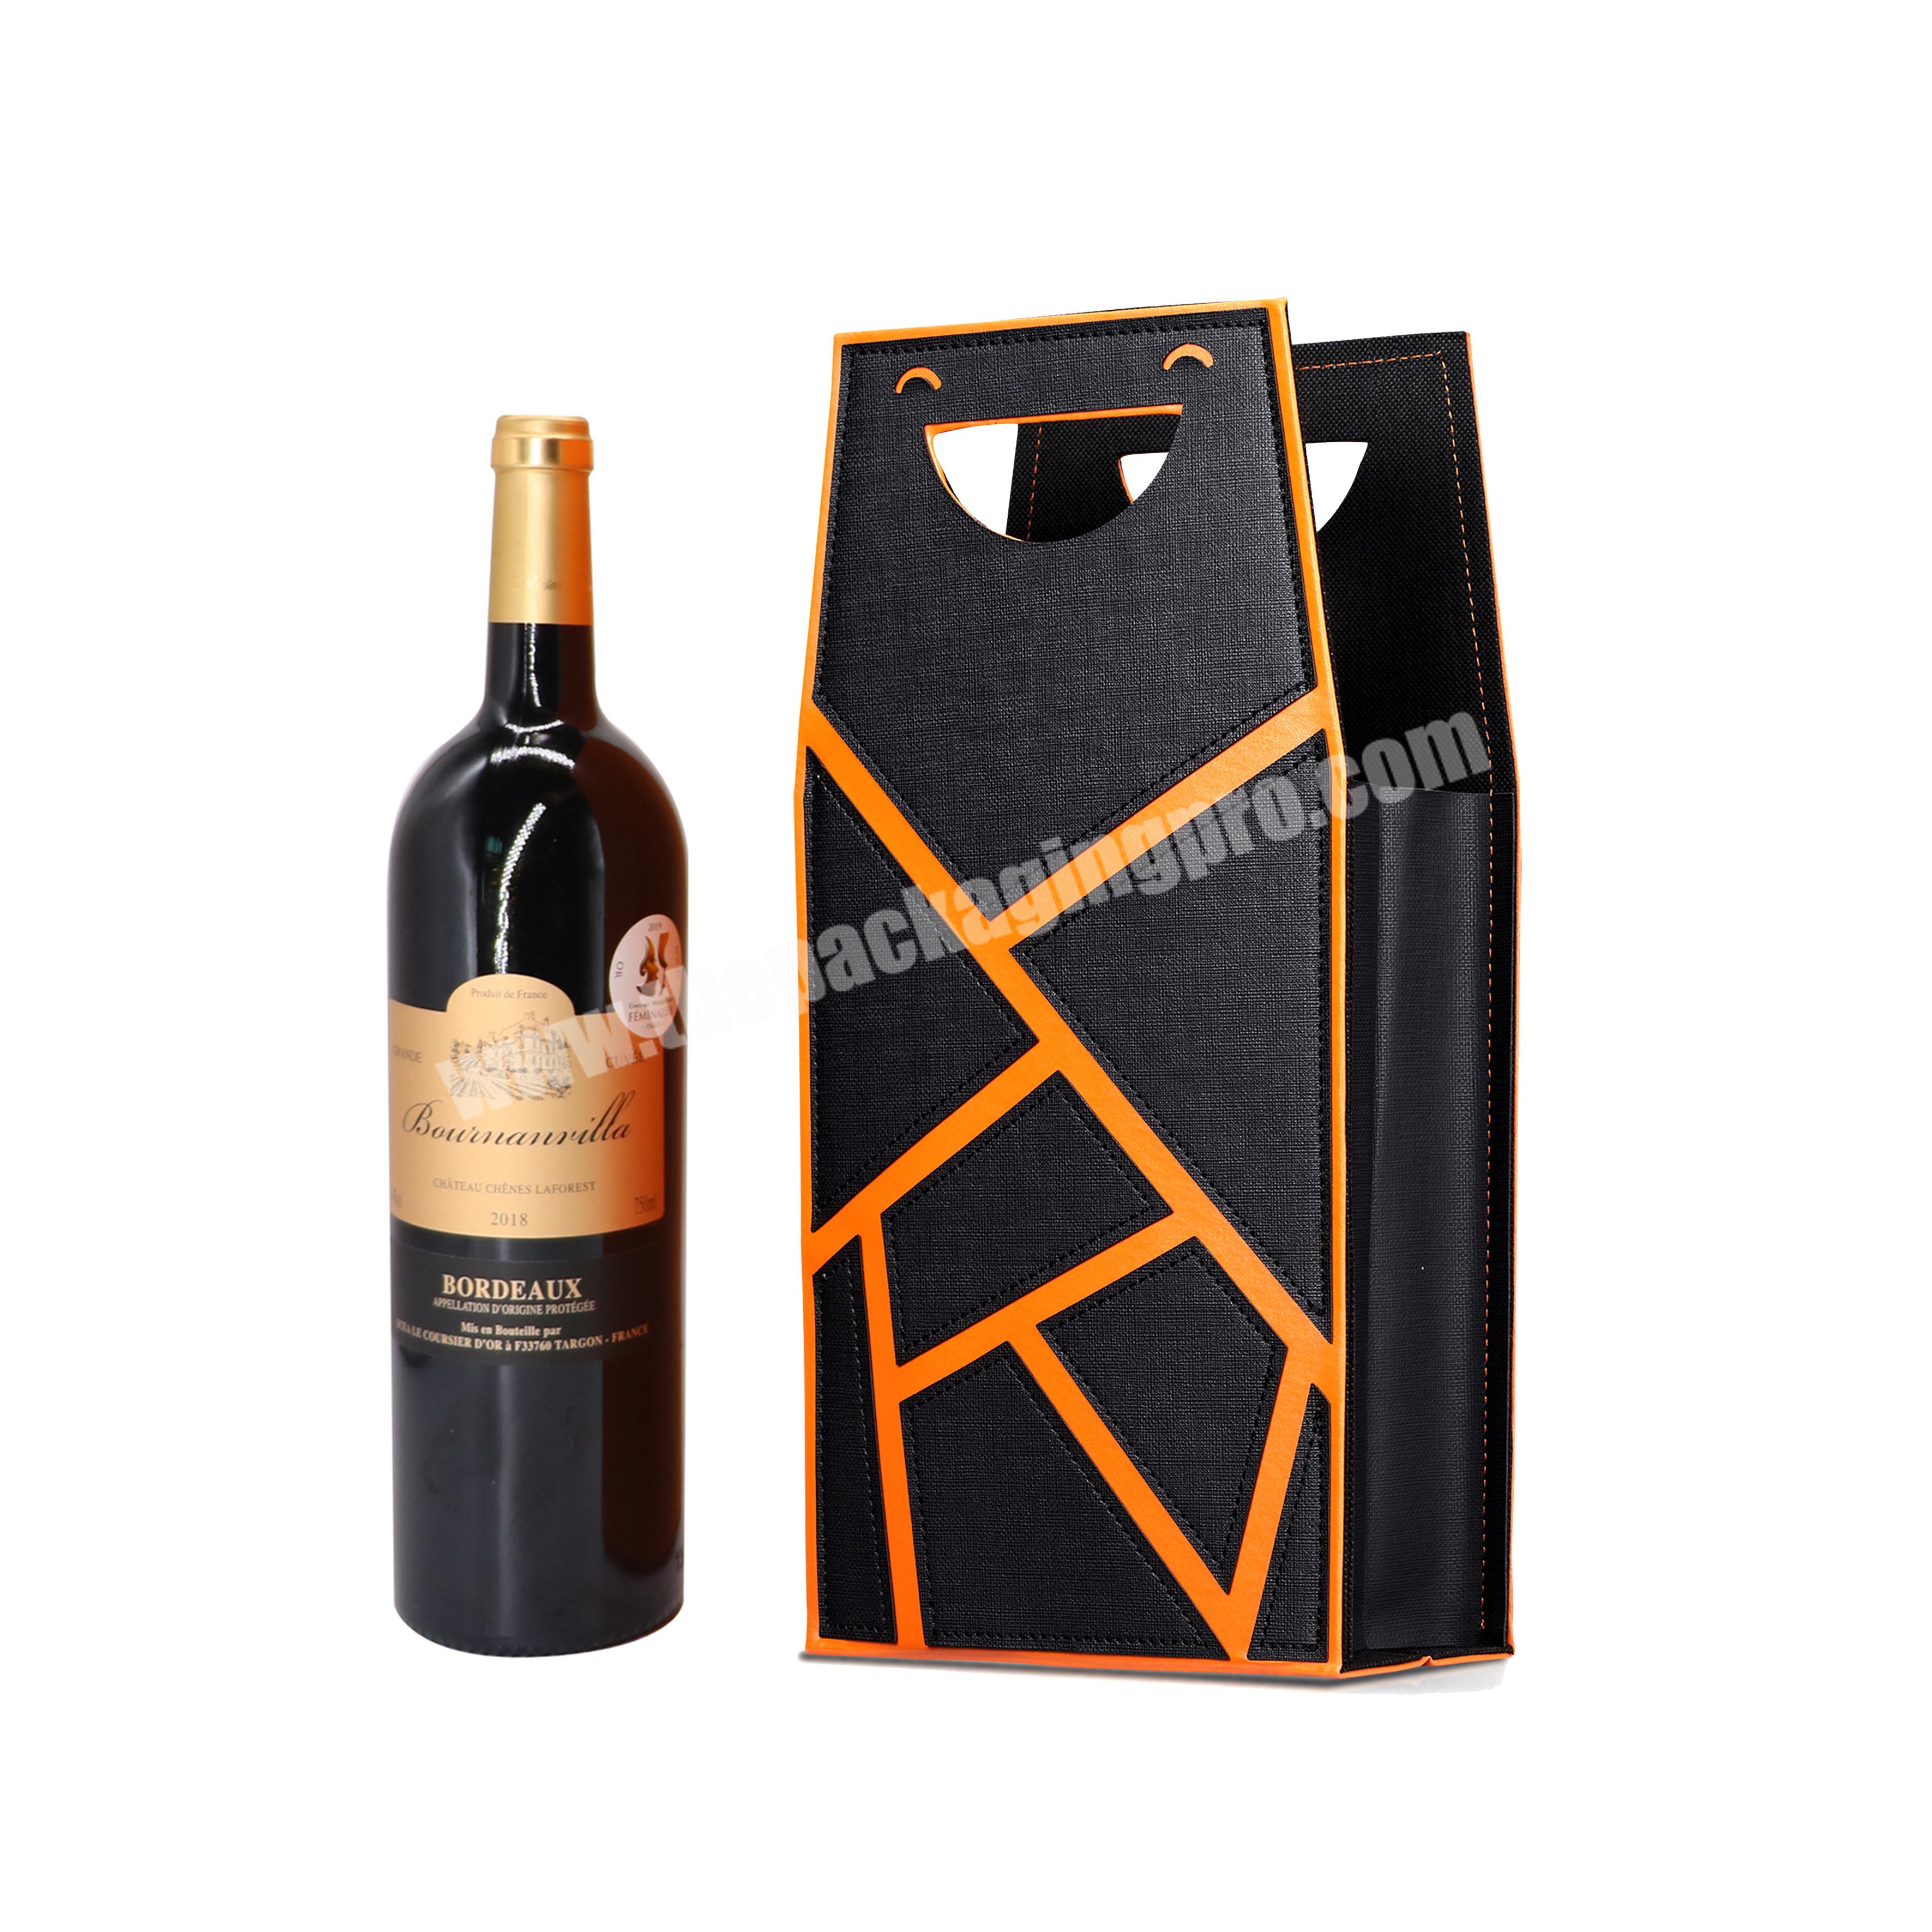 OEM collapsible whisky spirit wine box packaging wine box 1 bottle wine gift box set